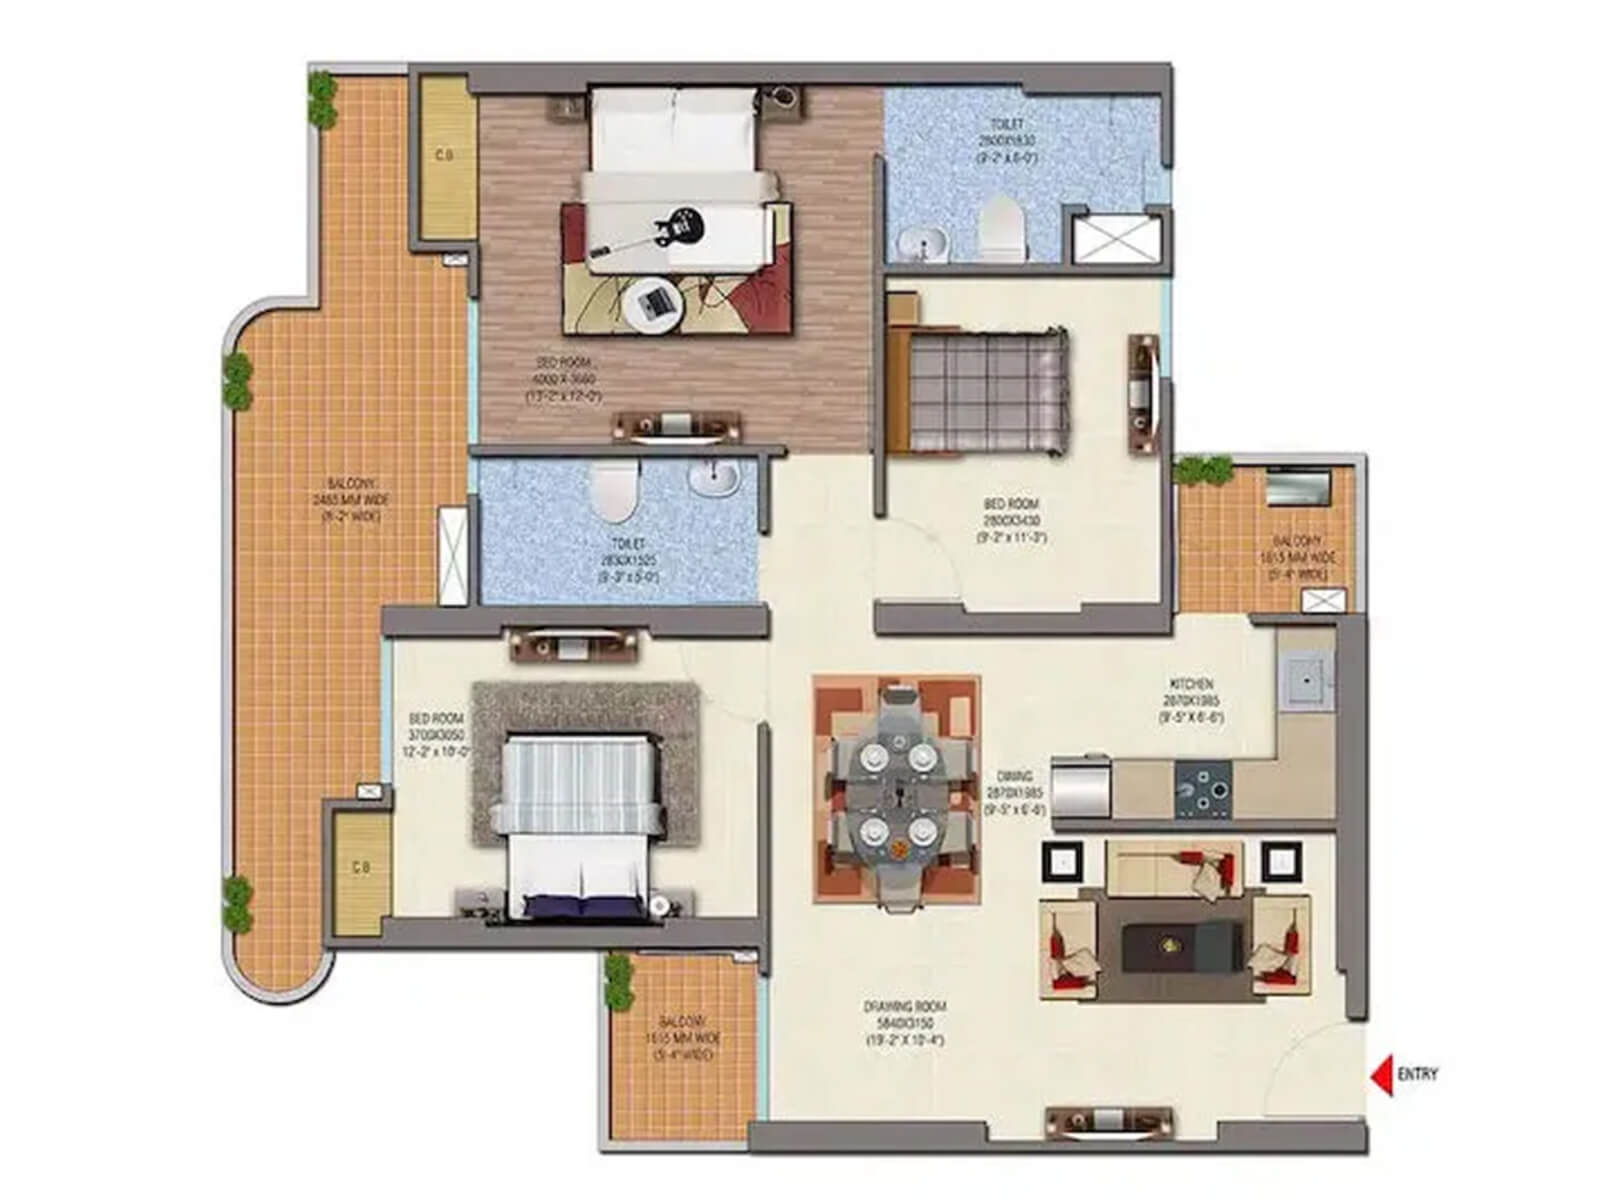 3 BHK(1480 sq.ft) Floor Plan at Saya Gold Avenue - 3 BHK Residentail Luxury Apartments in Indirapuram Ghaziabad